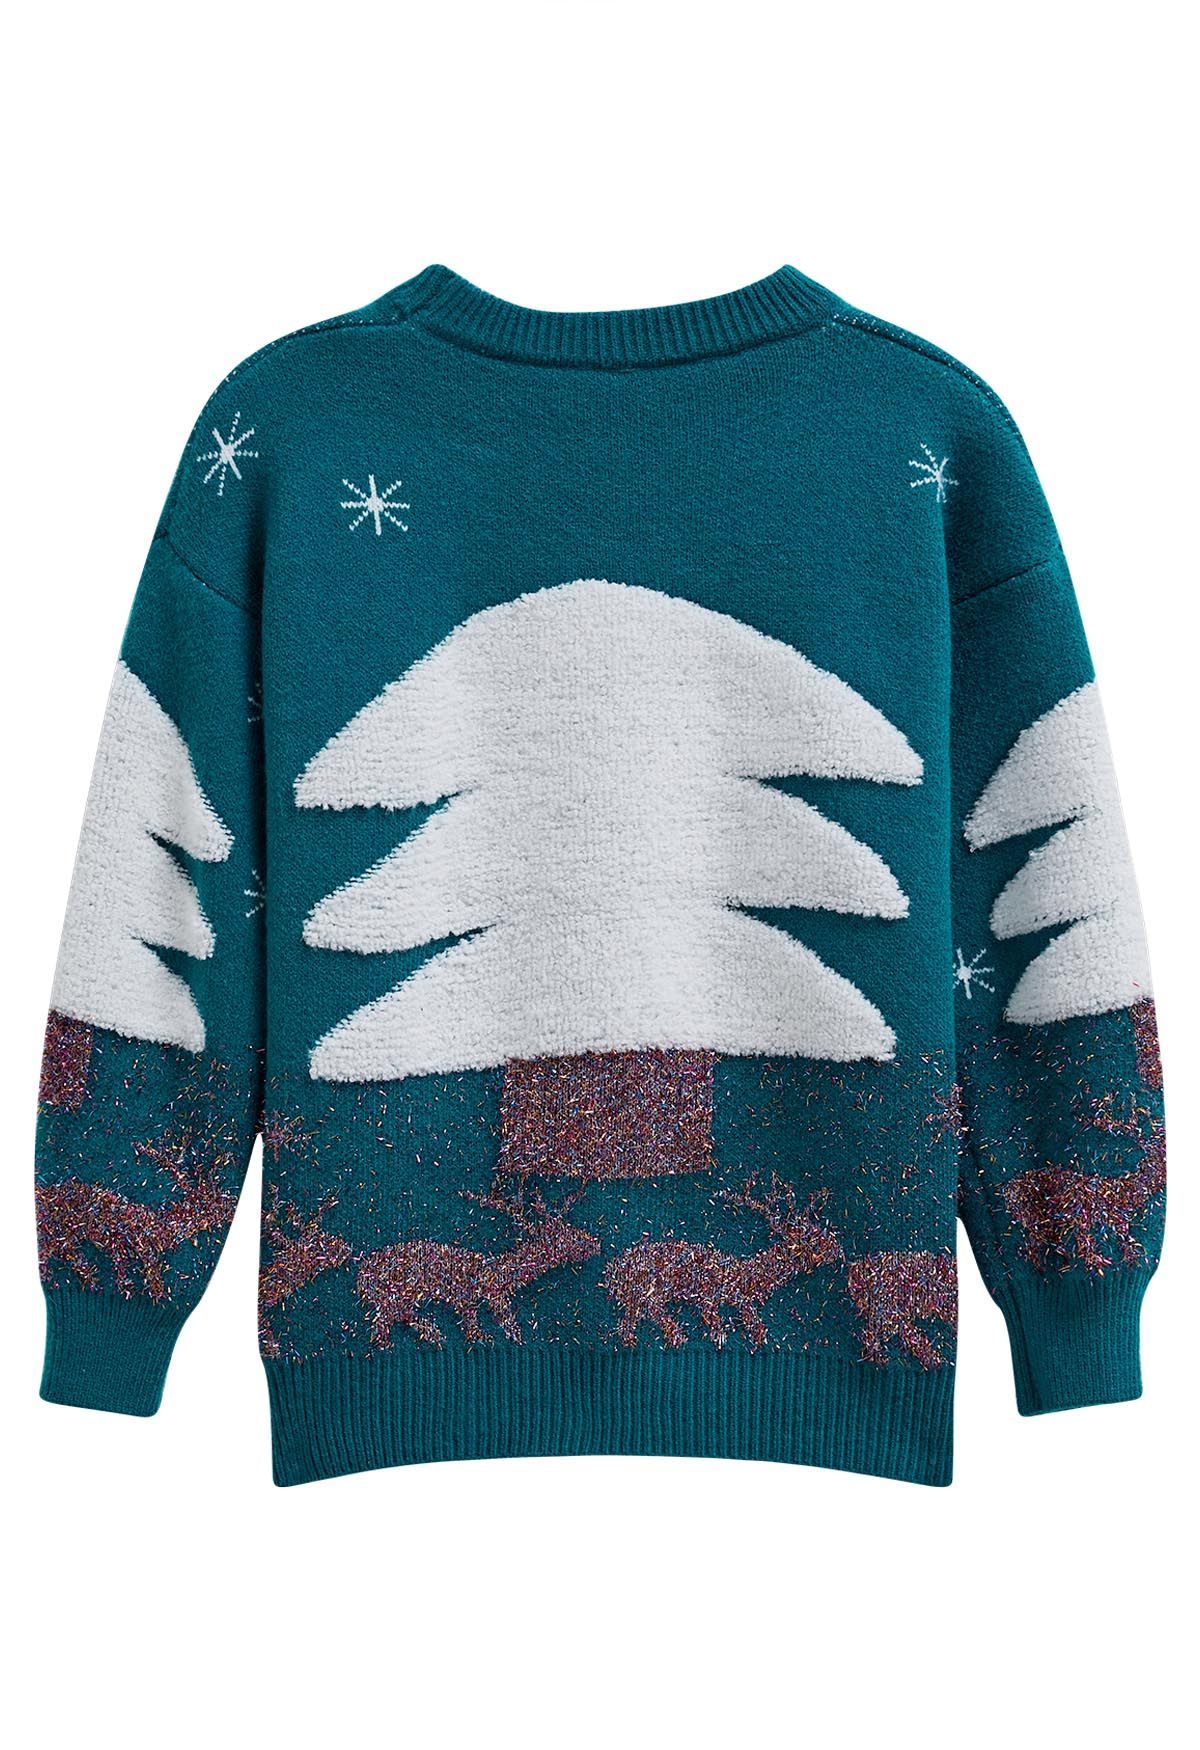 Joyful Christmas Tree and Elk Jacquard Knit Sweater in Teal